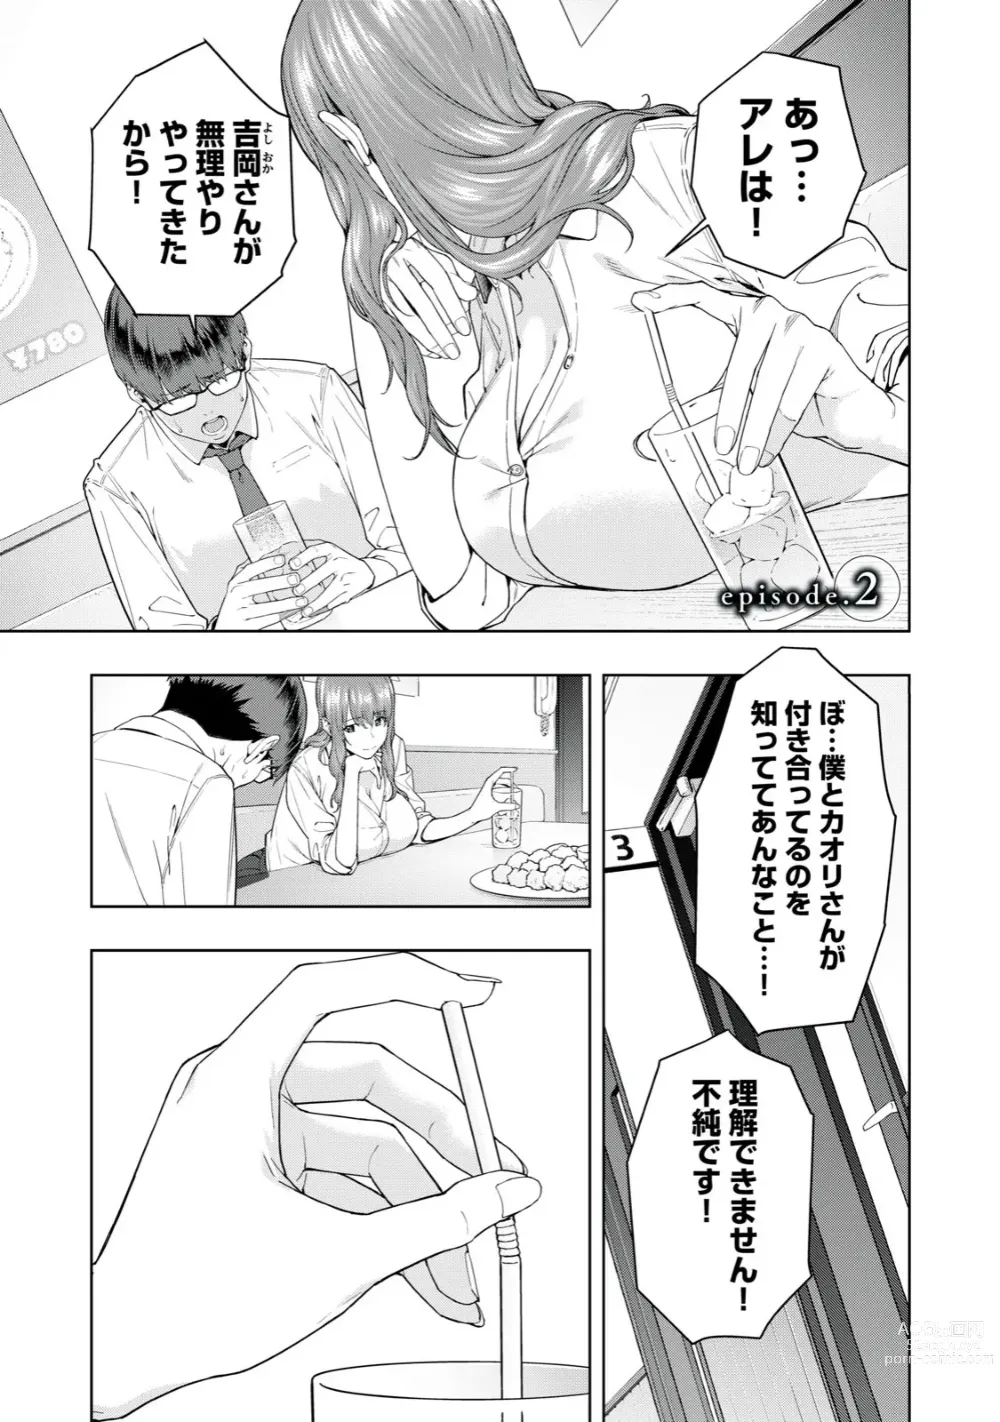 Page 10 of manga Kanojo no Tomodachi